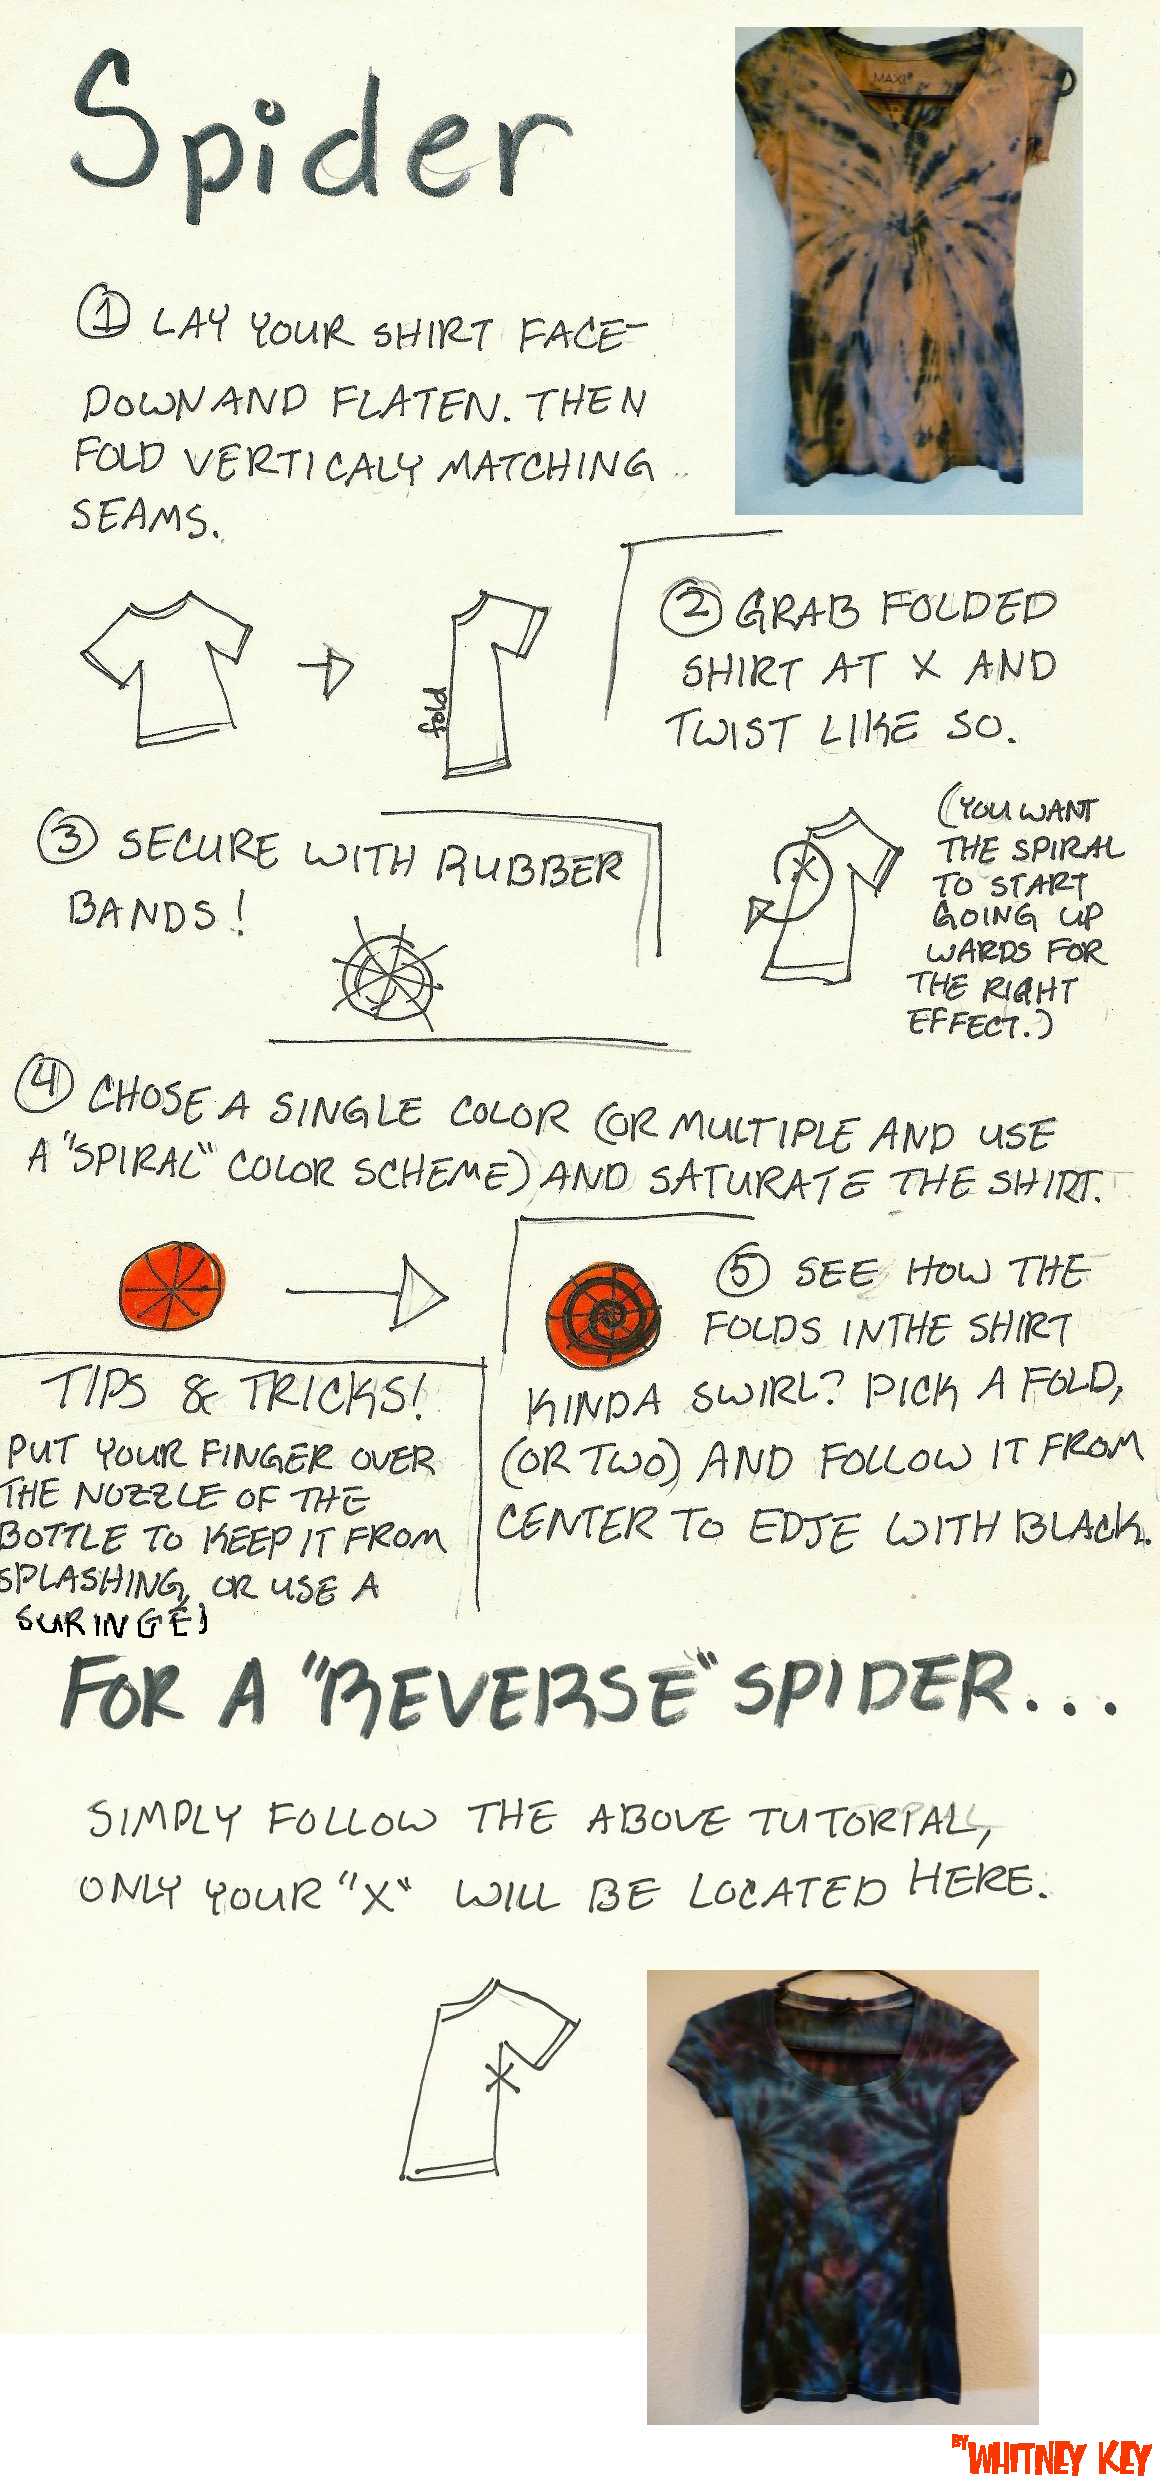 Spider Tie-Dye Shirt - quick and easy tie-dye pattern - Dye DIY